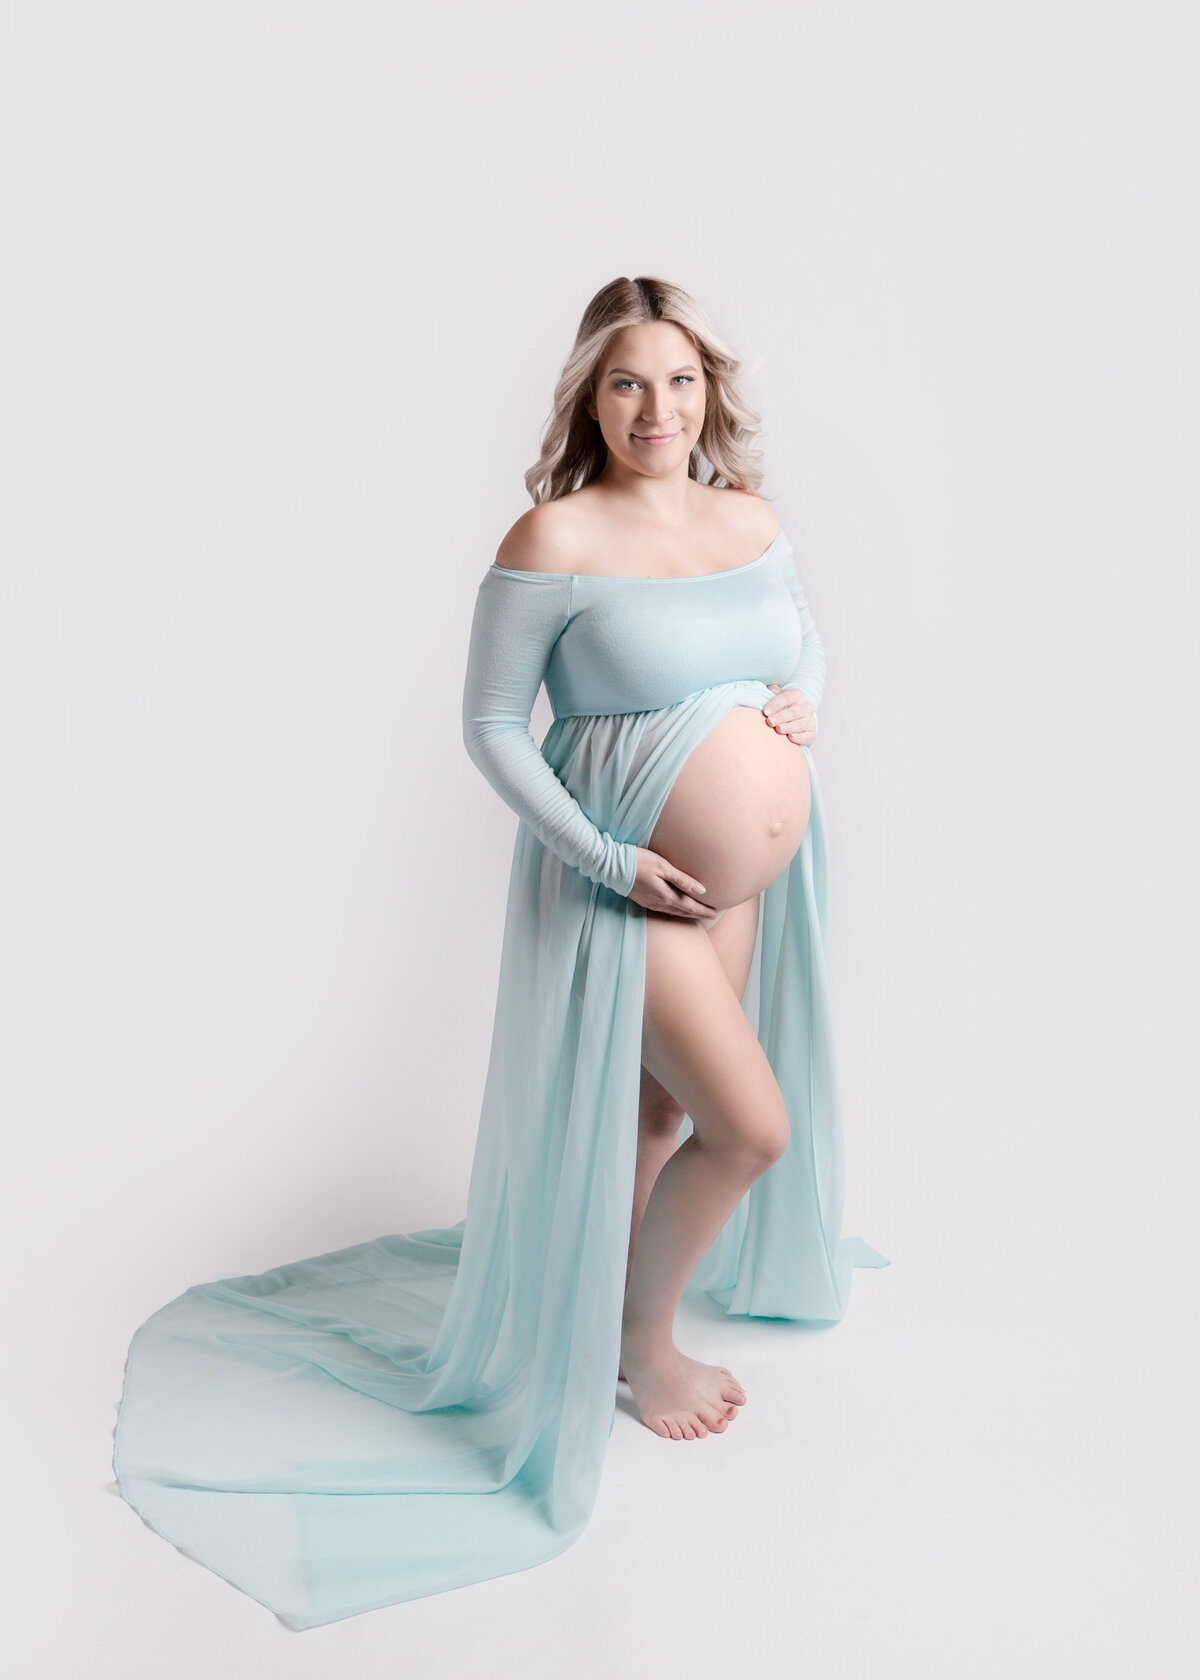 Alyssa - Calgary Maternity Photographer - Belliam Photos 11